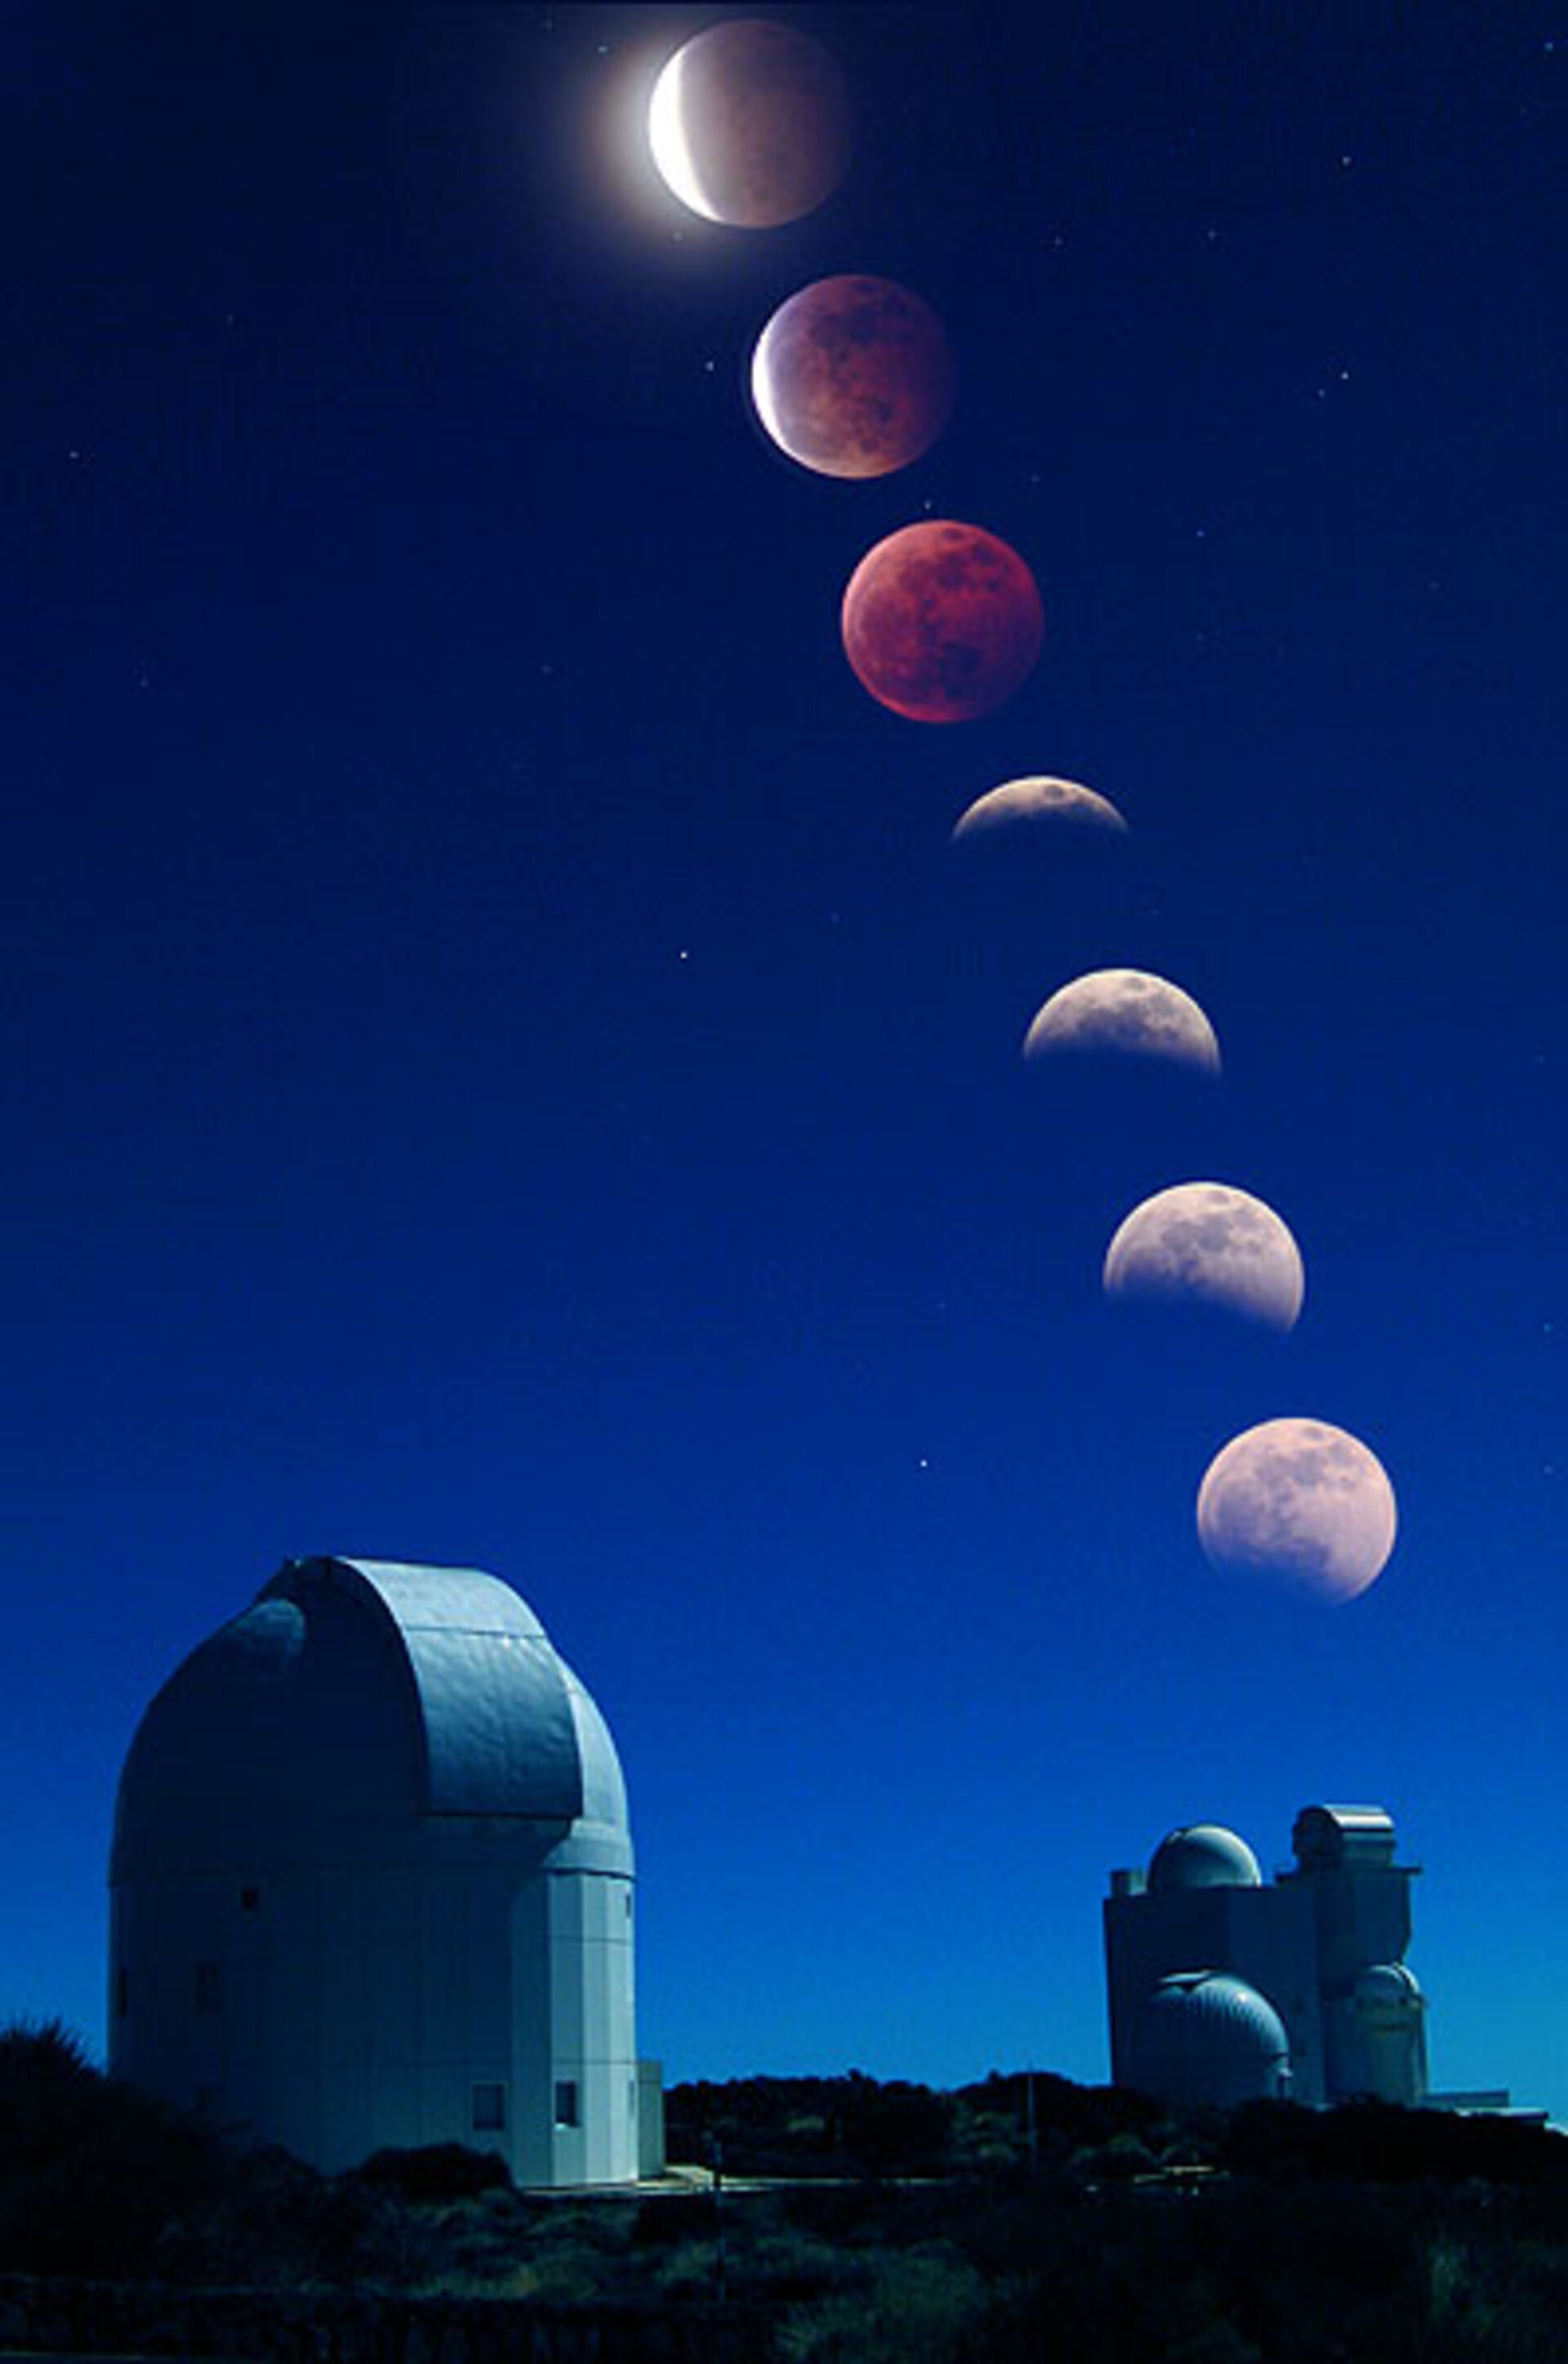 Lunar eclipse at the Observatorio del Teide, Tenerife